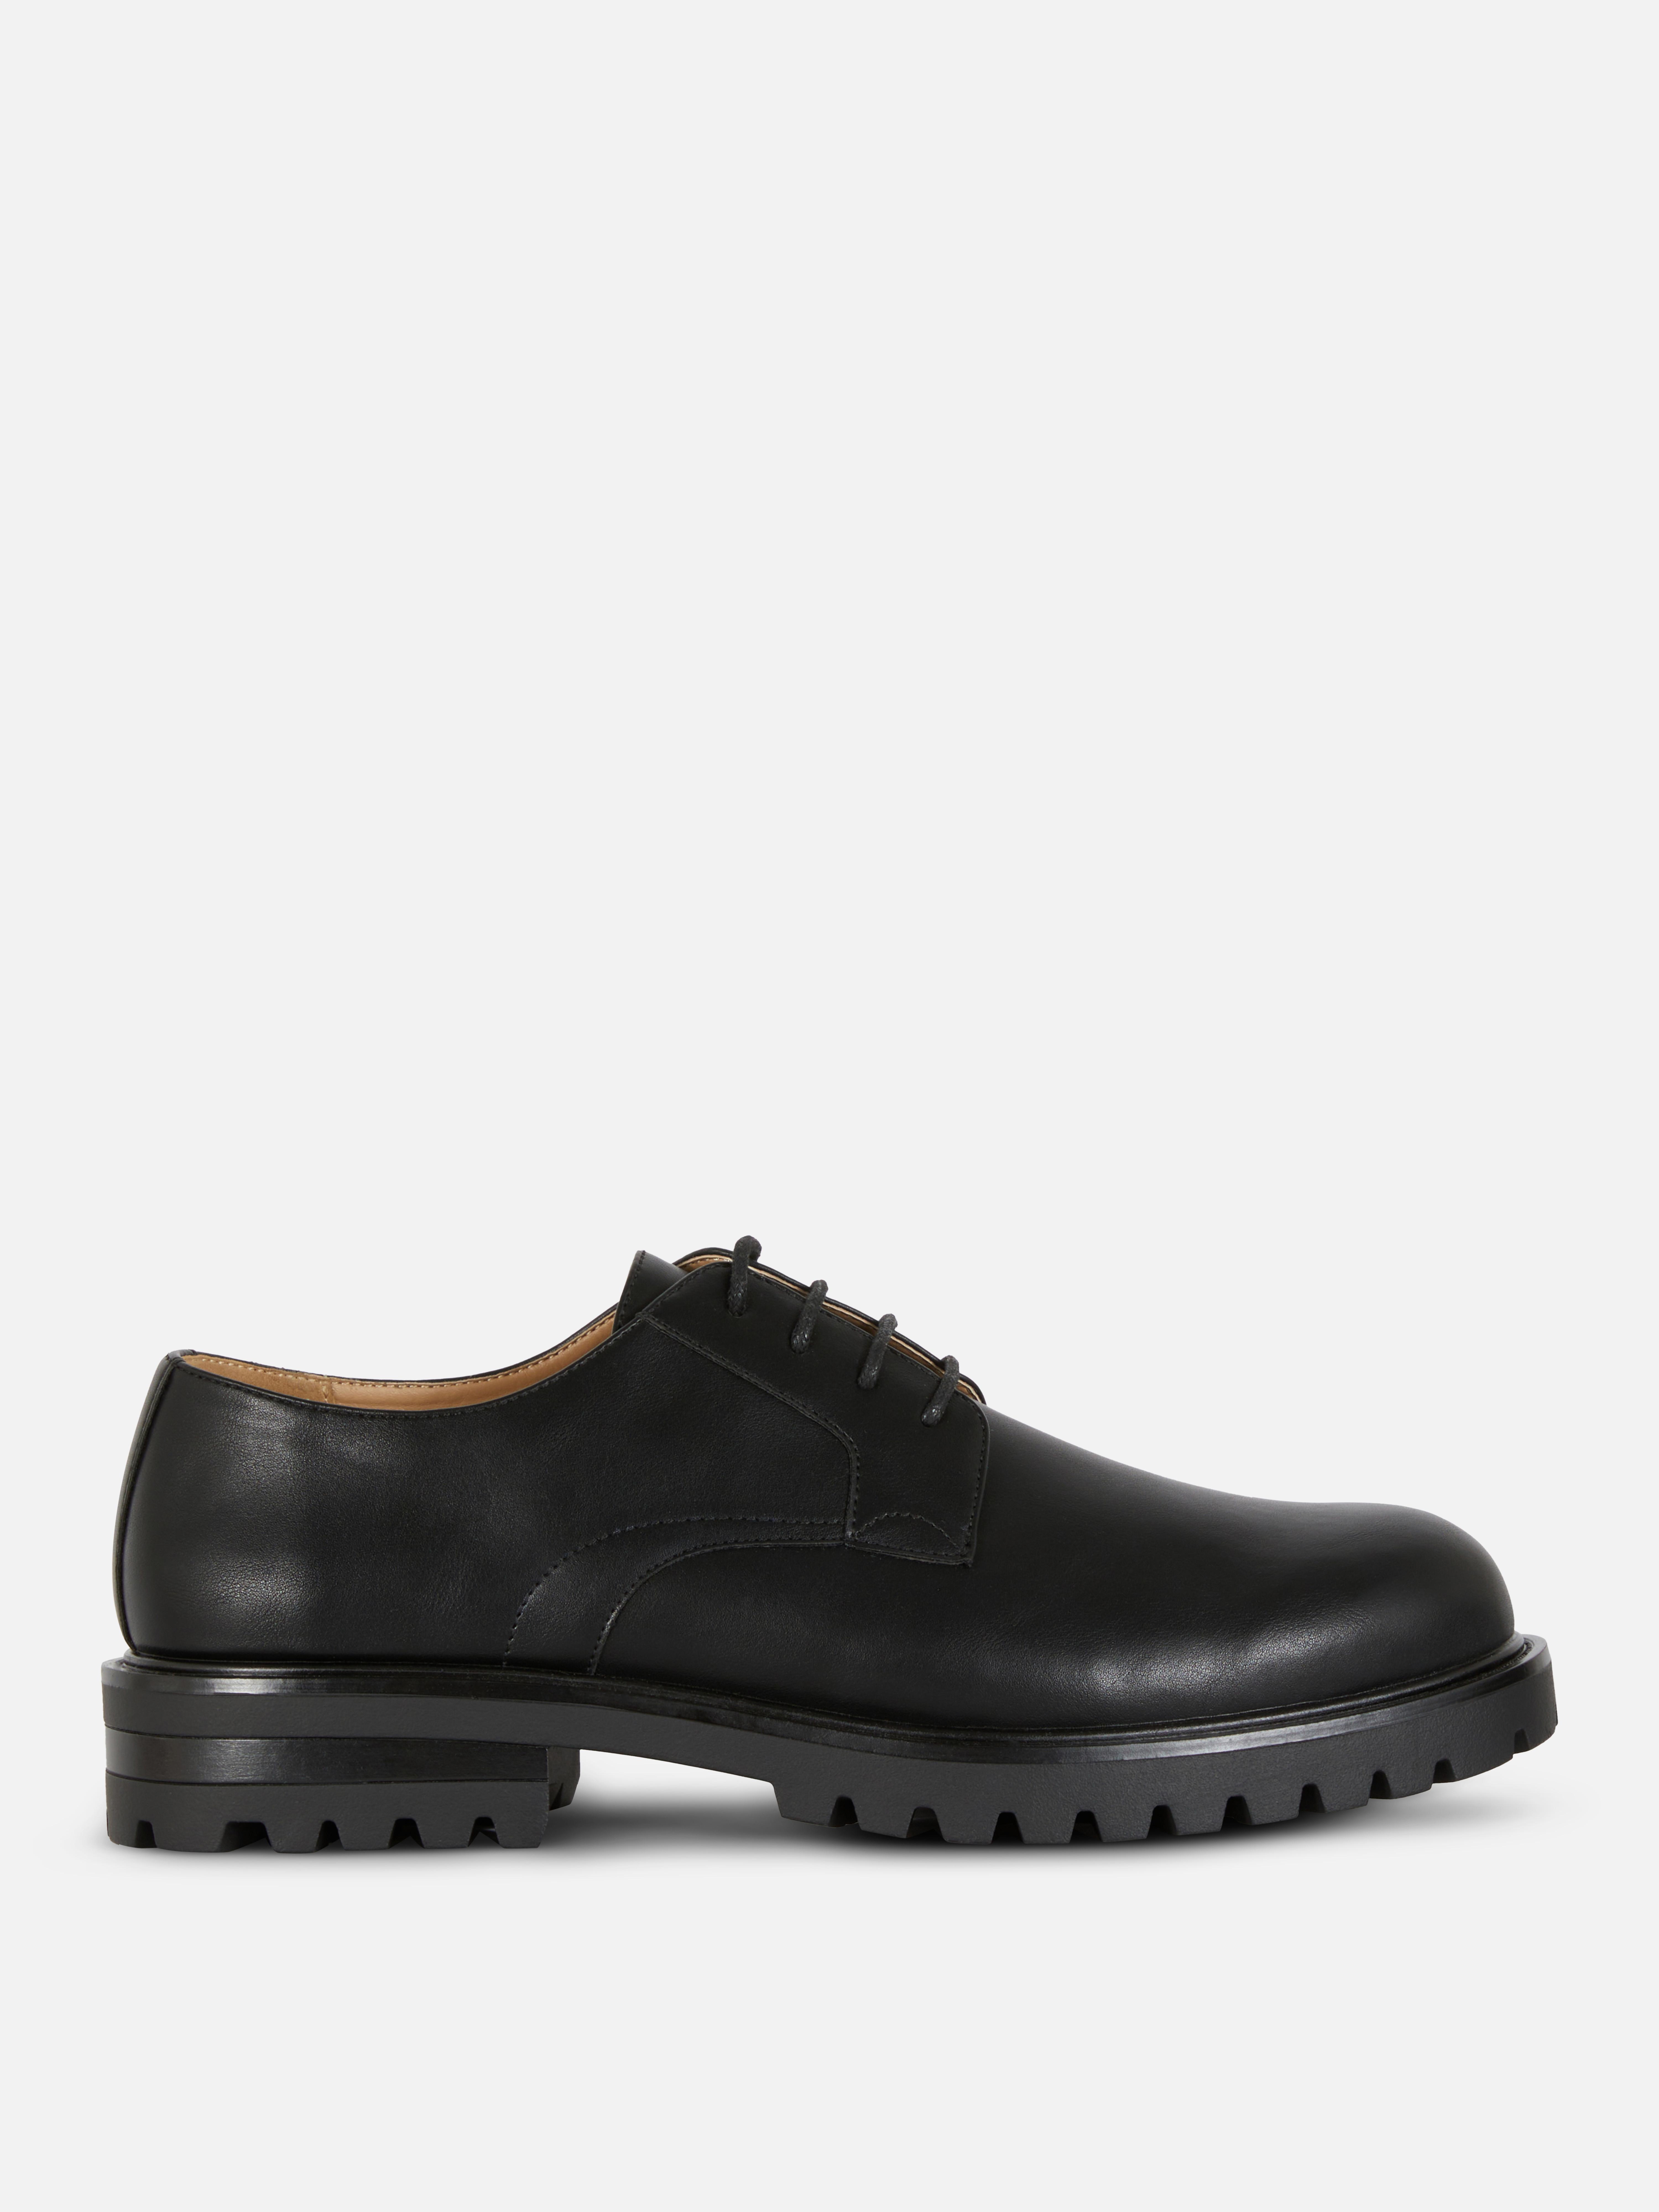 Men's Loafers & Brogues | Men's Derby Shoes | Primark